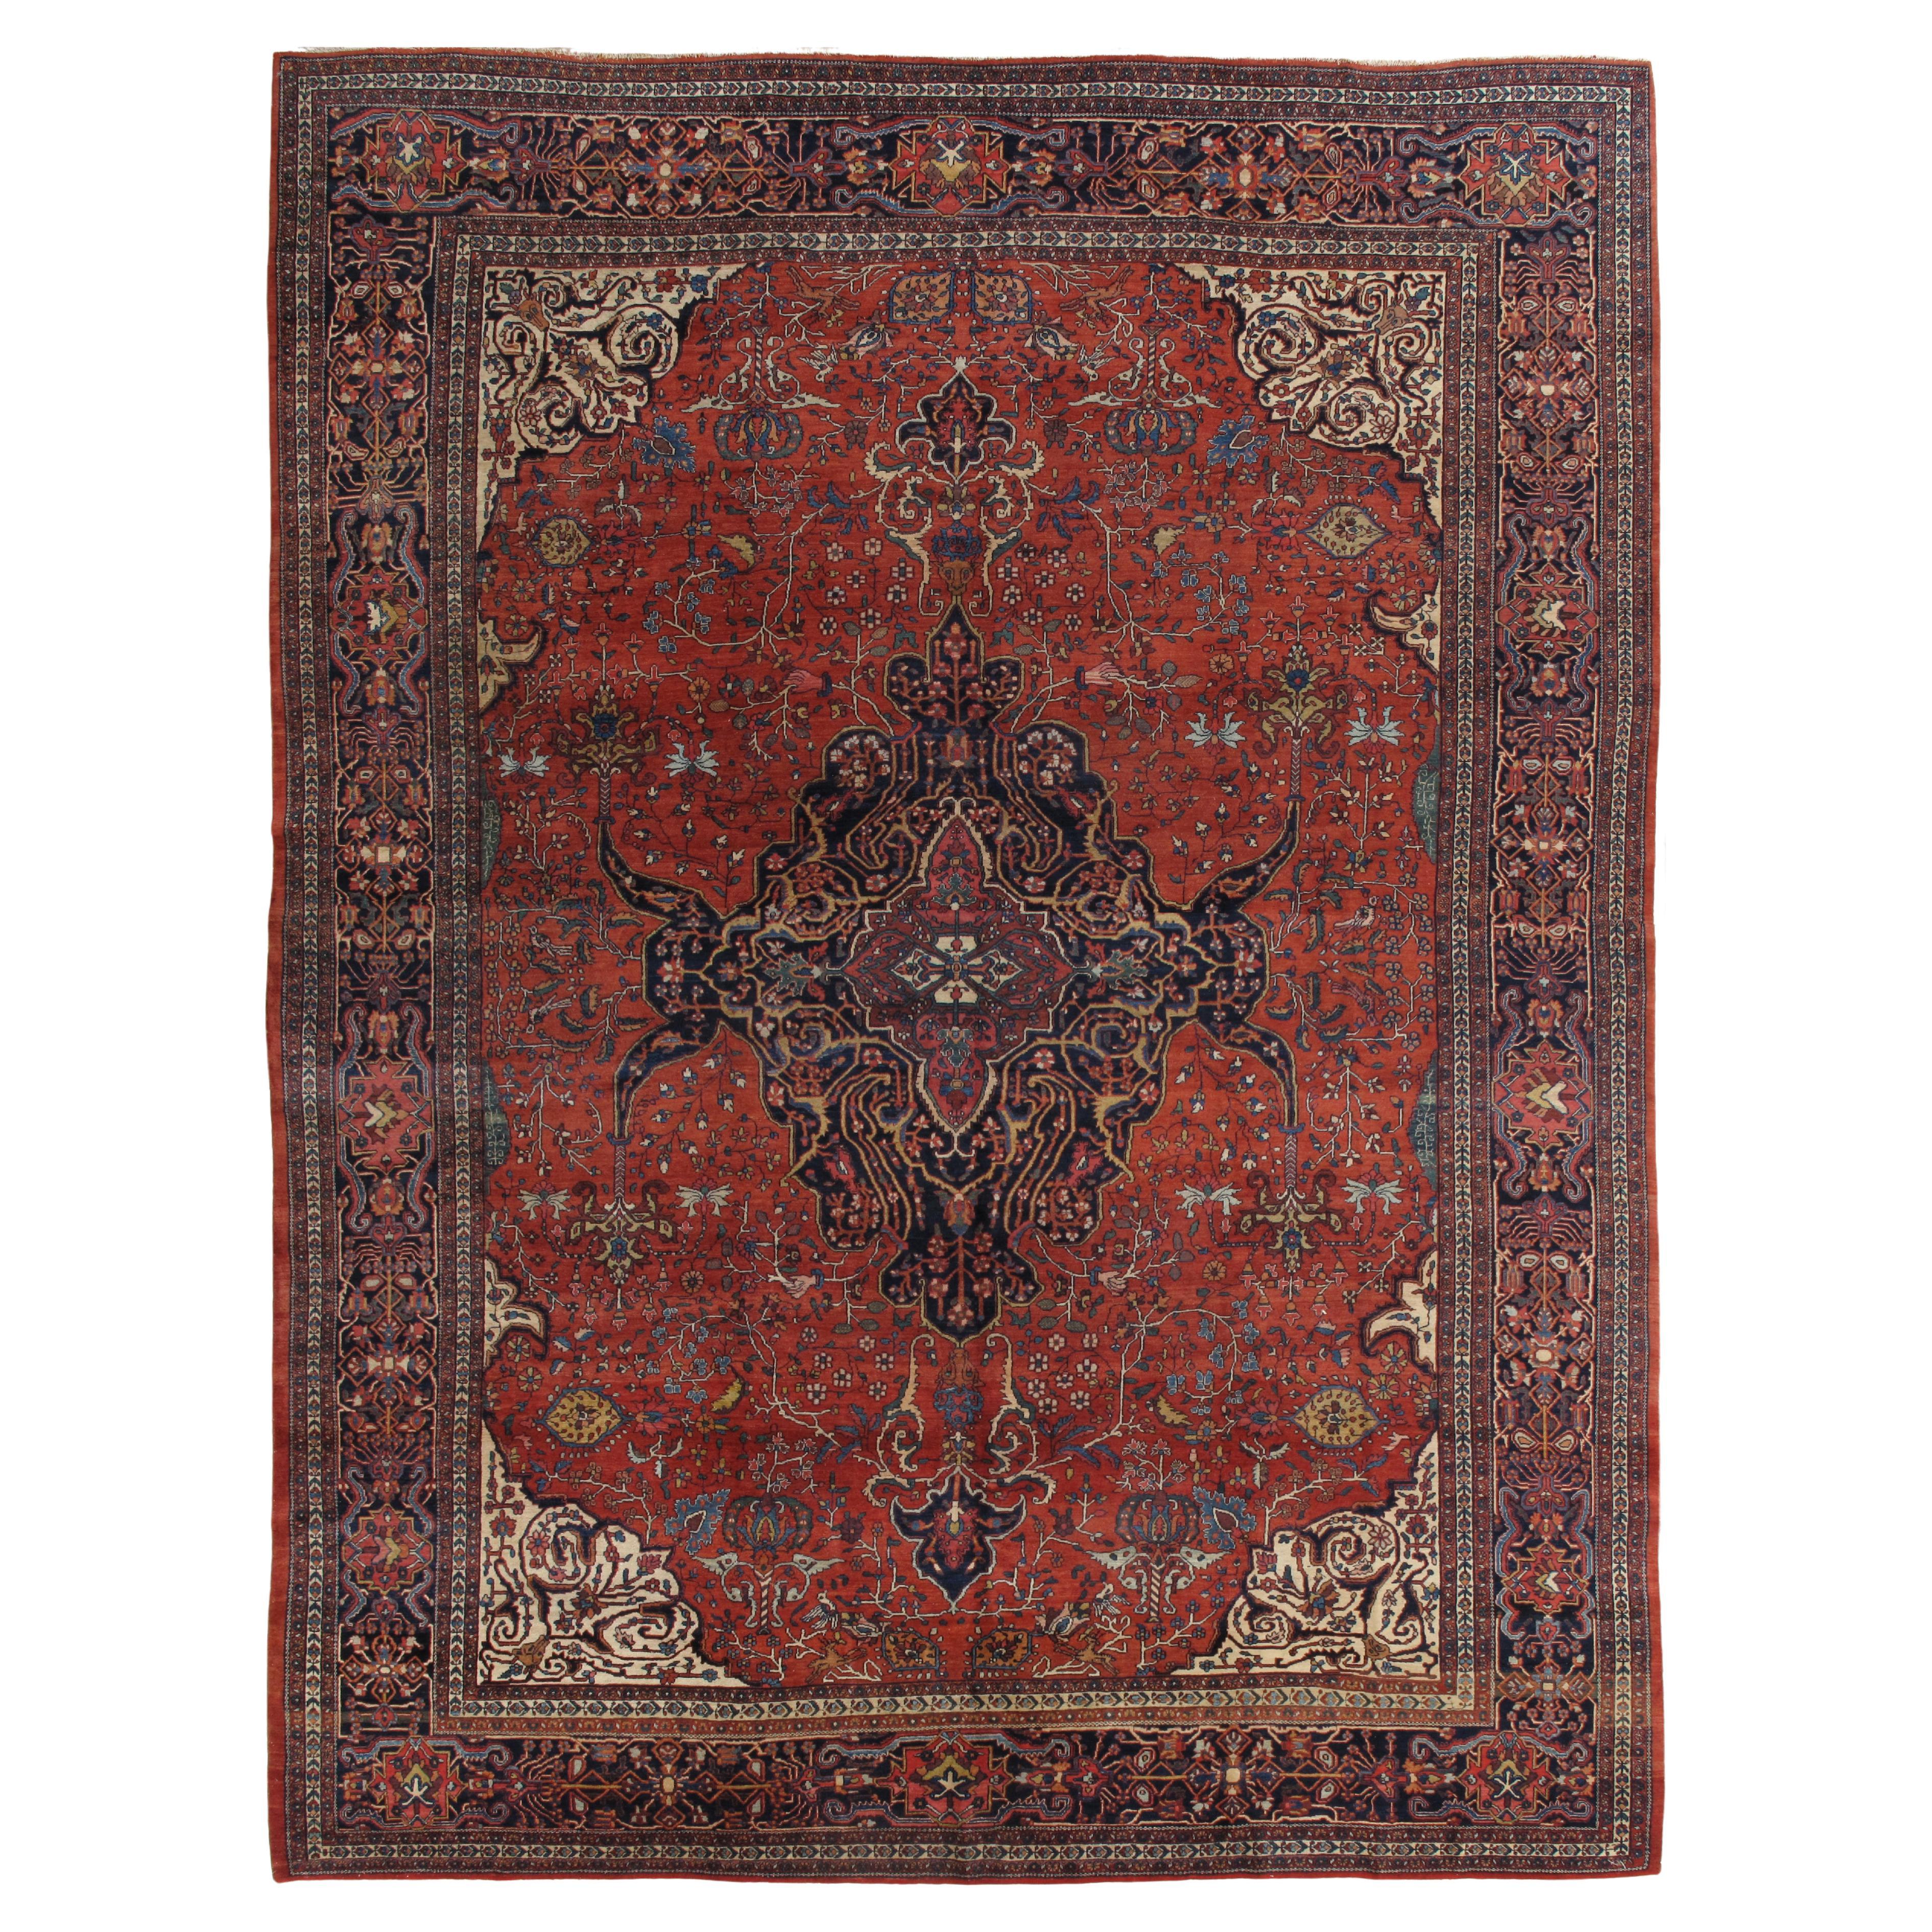 Antique Farahan Sarouk Carpet, Handmade Oriental Rug, Red, Navy, Fine Details For Sale